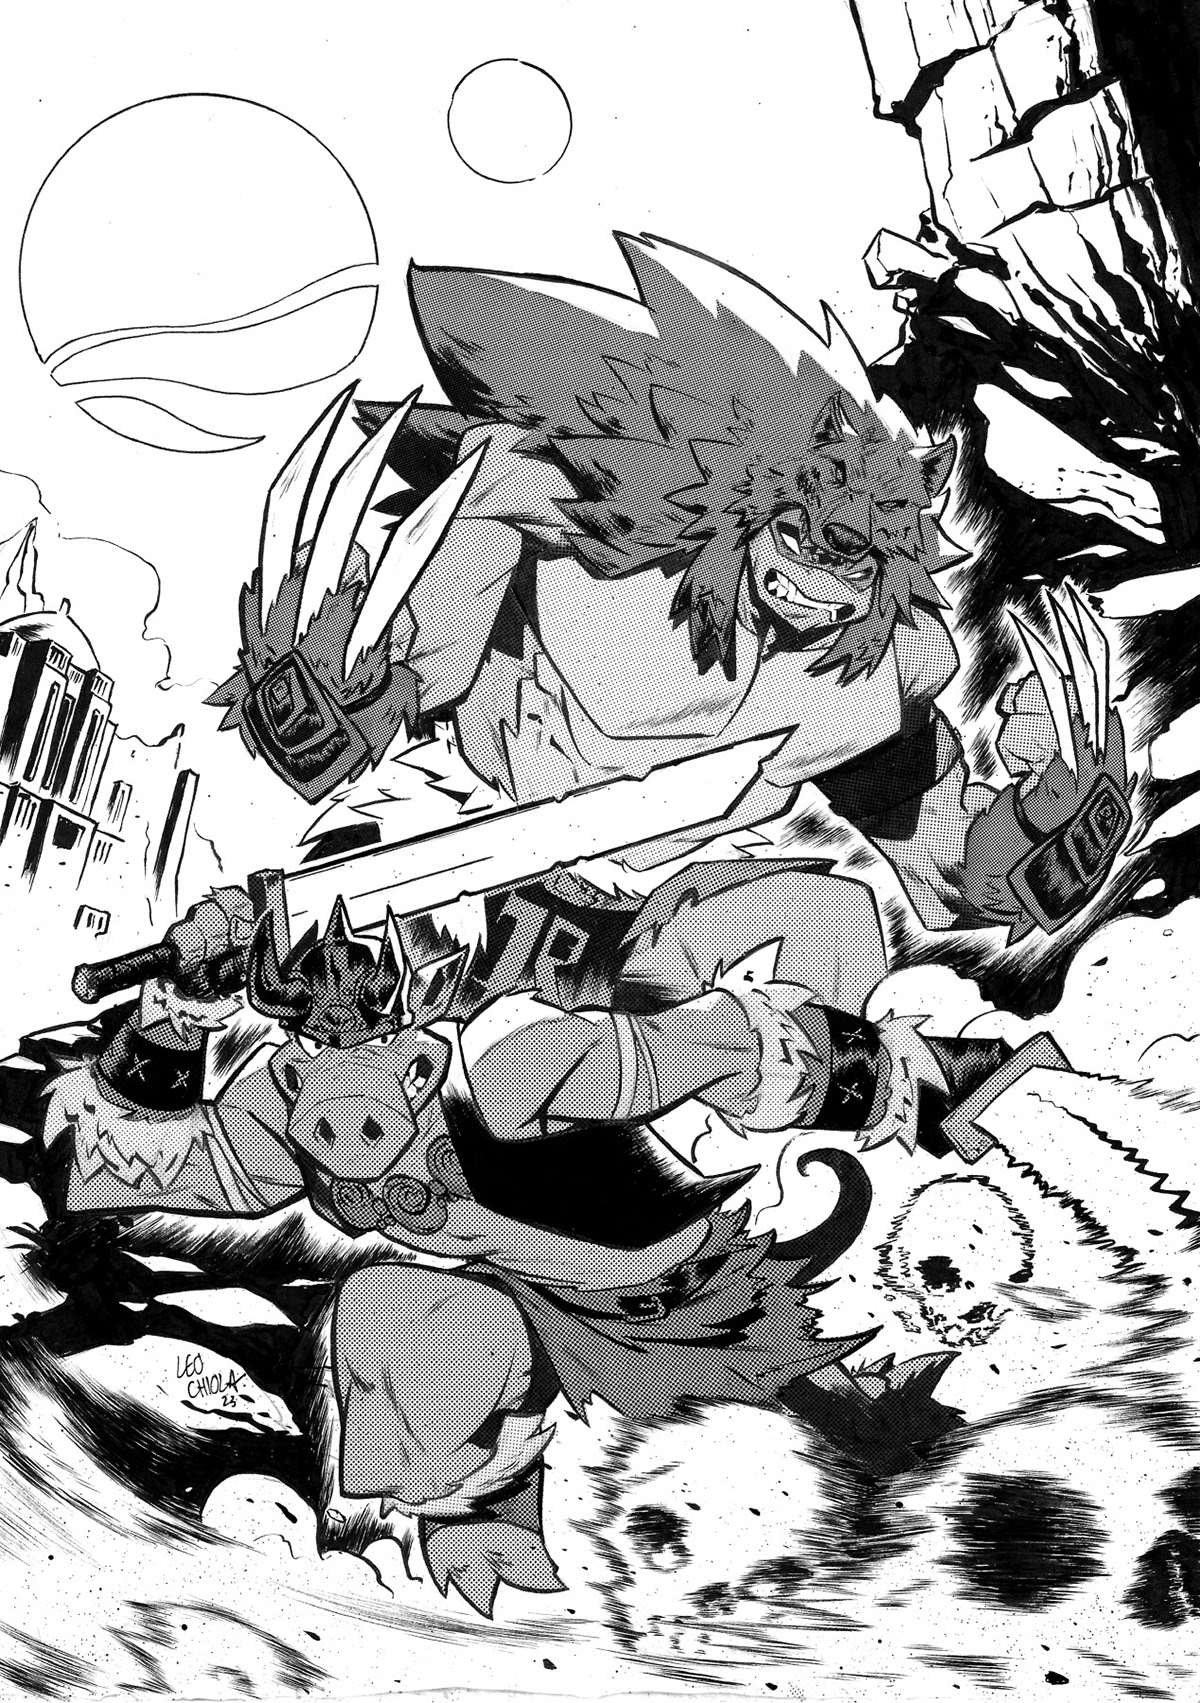 ILLUSTRATION  Character design  TRADITIONAL ART Drawing  artwork comics marvel wolverine batman dc